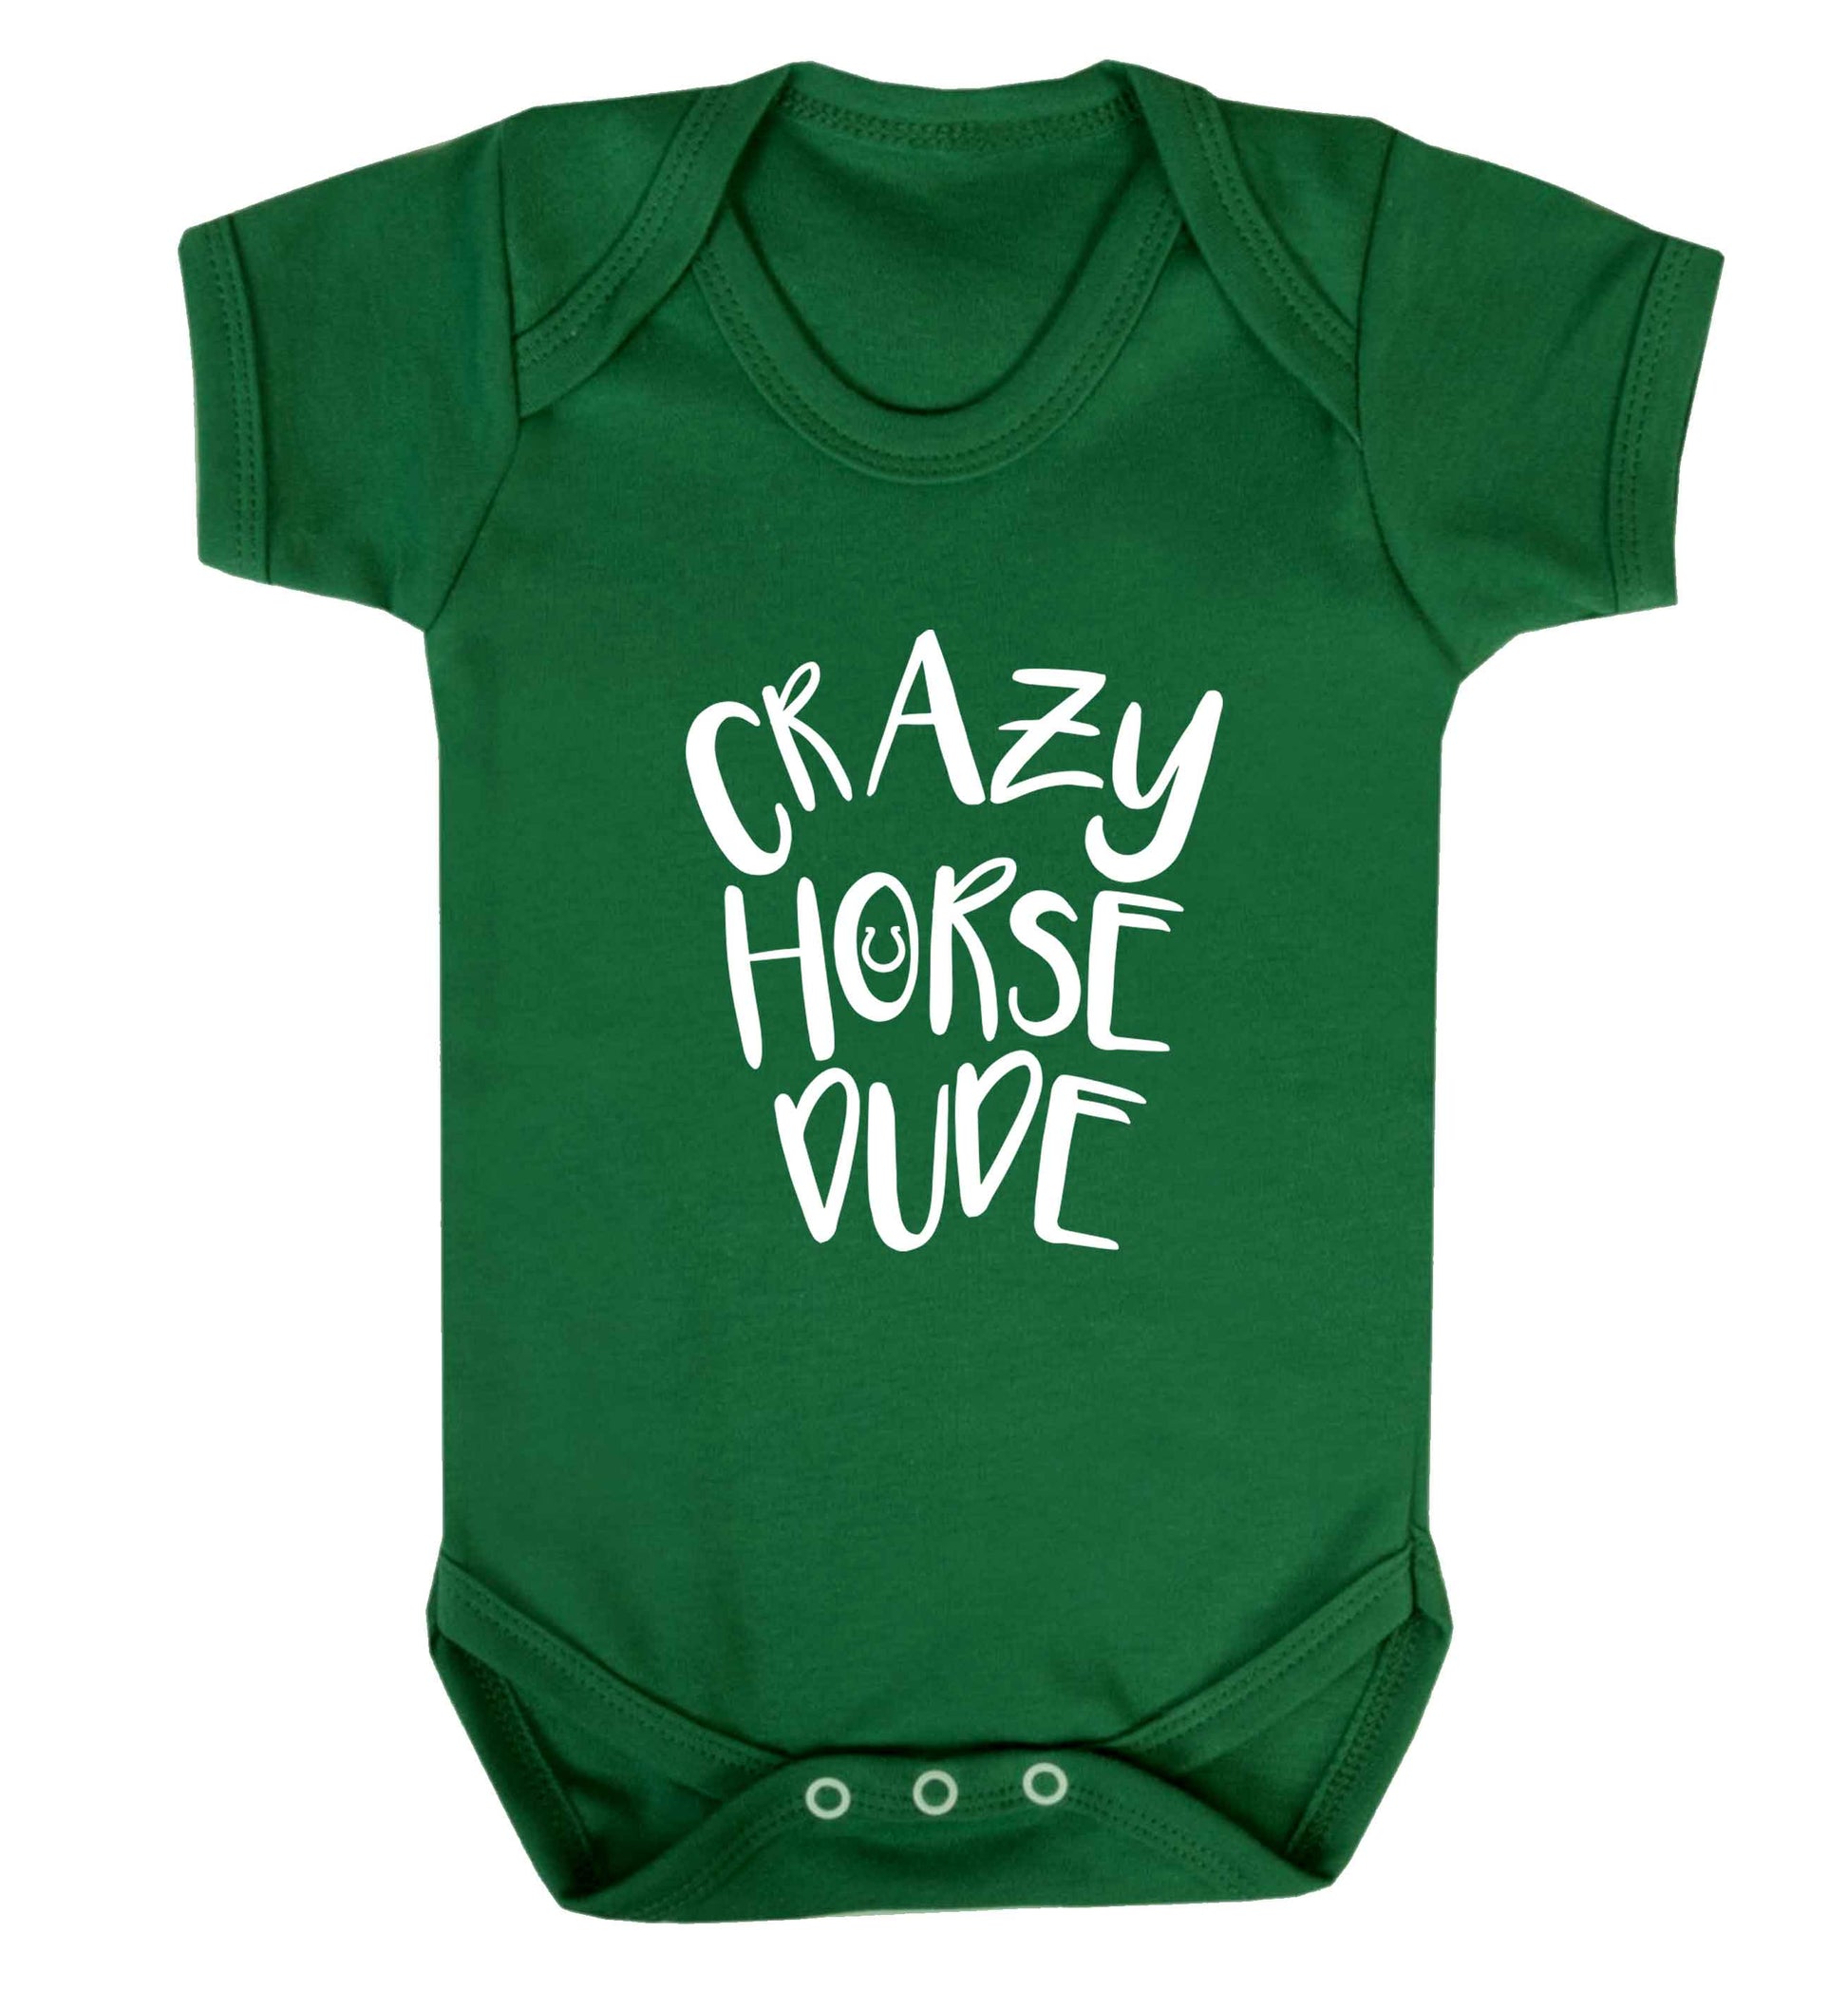 Crazy horse dude baby vest green 18-24 months